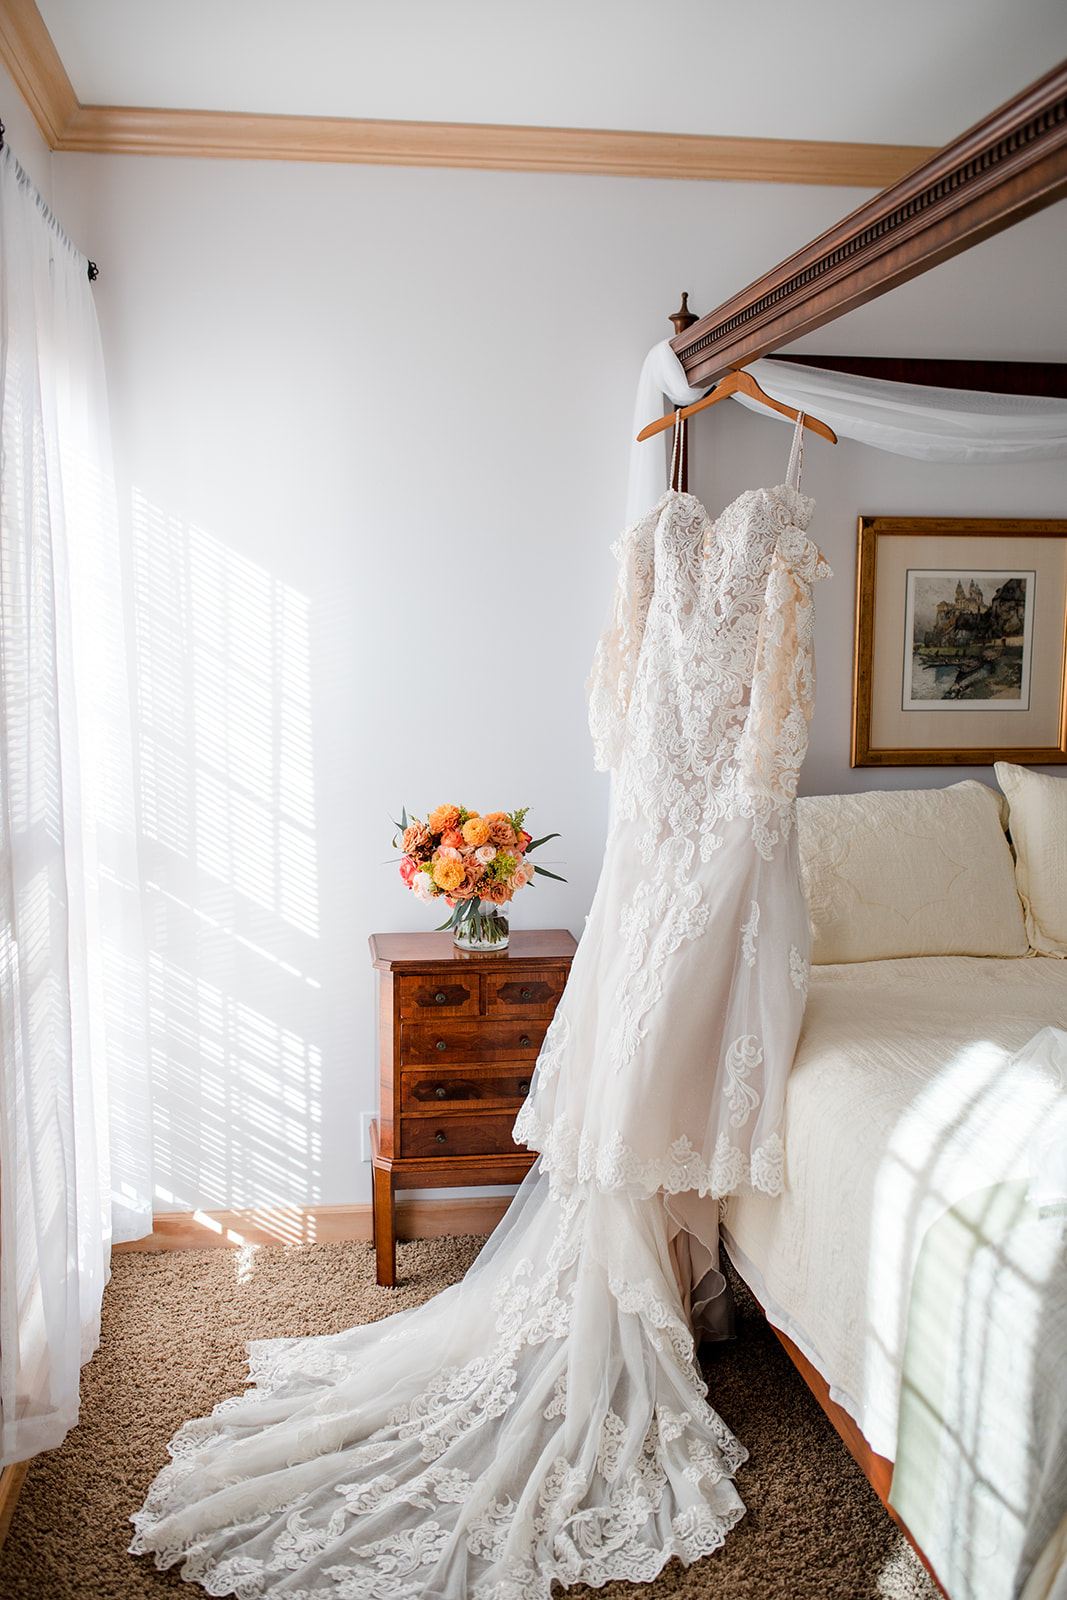 Cedarmont farm bridal suite with wedding dress and colorful bouquet